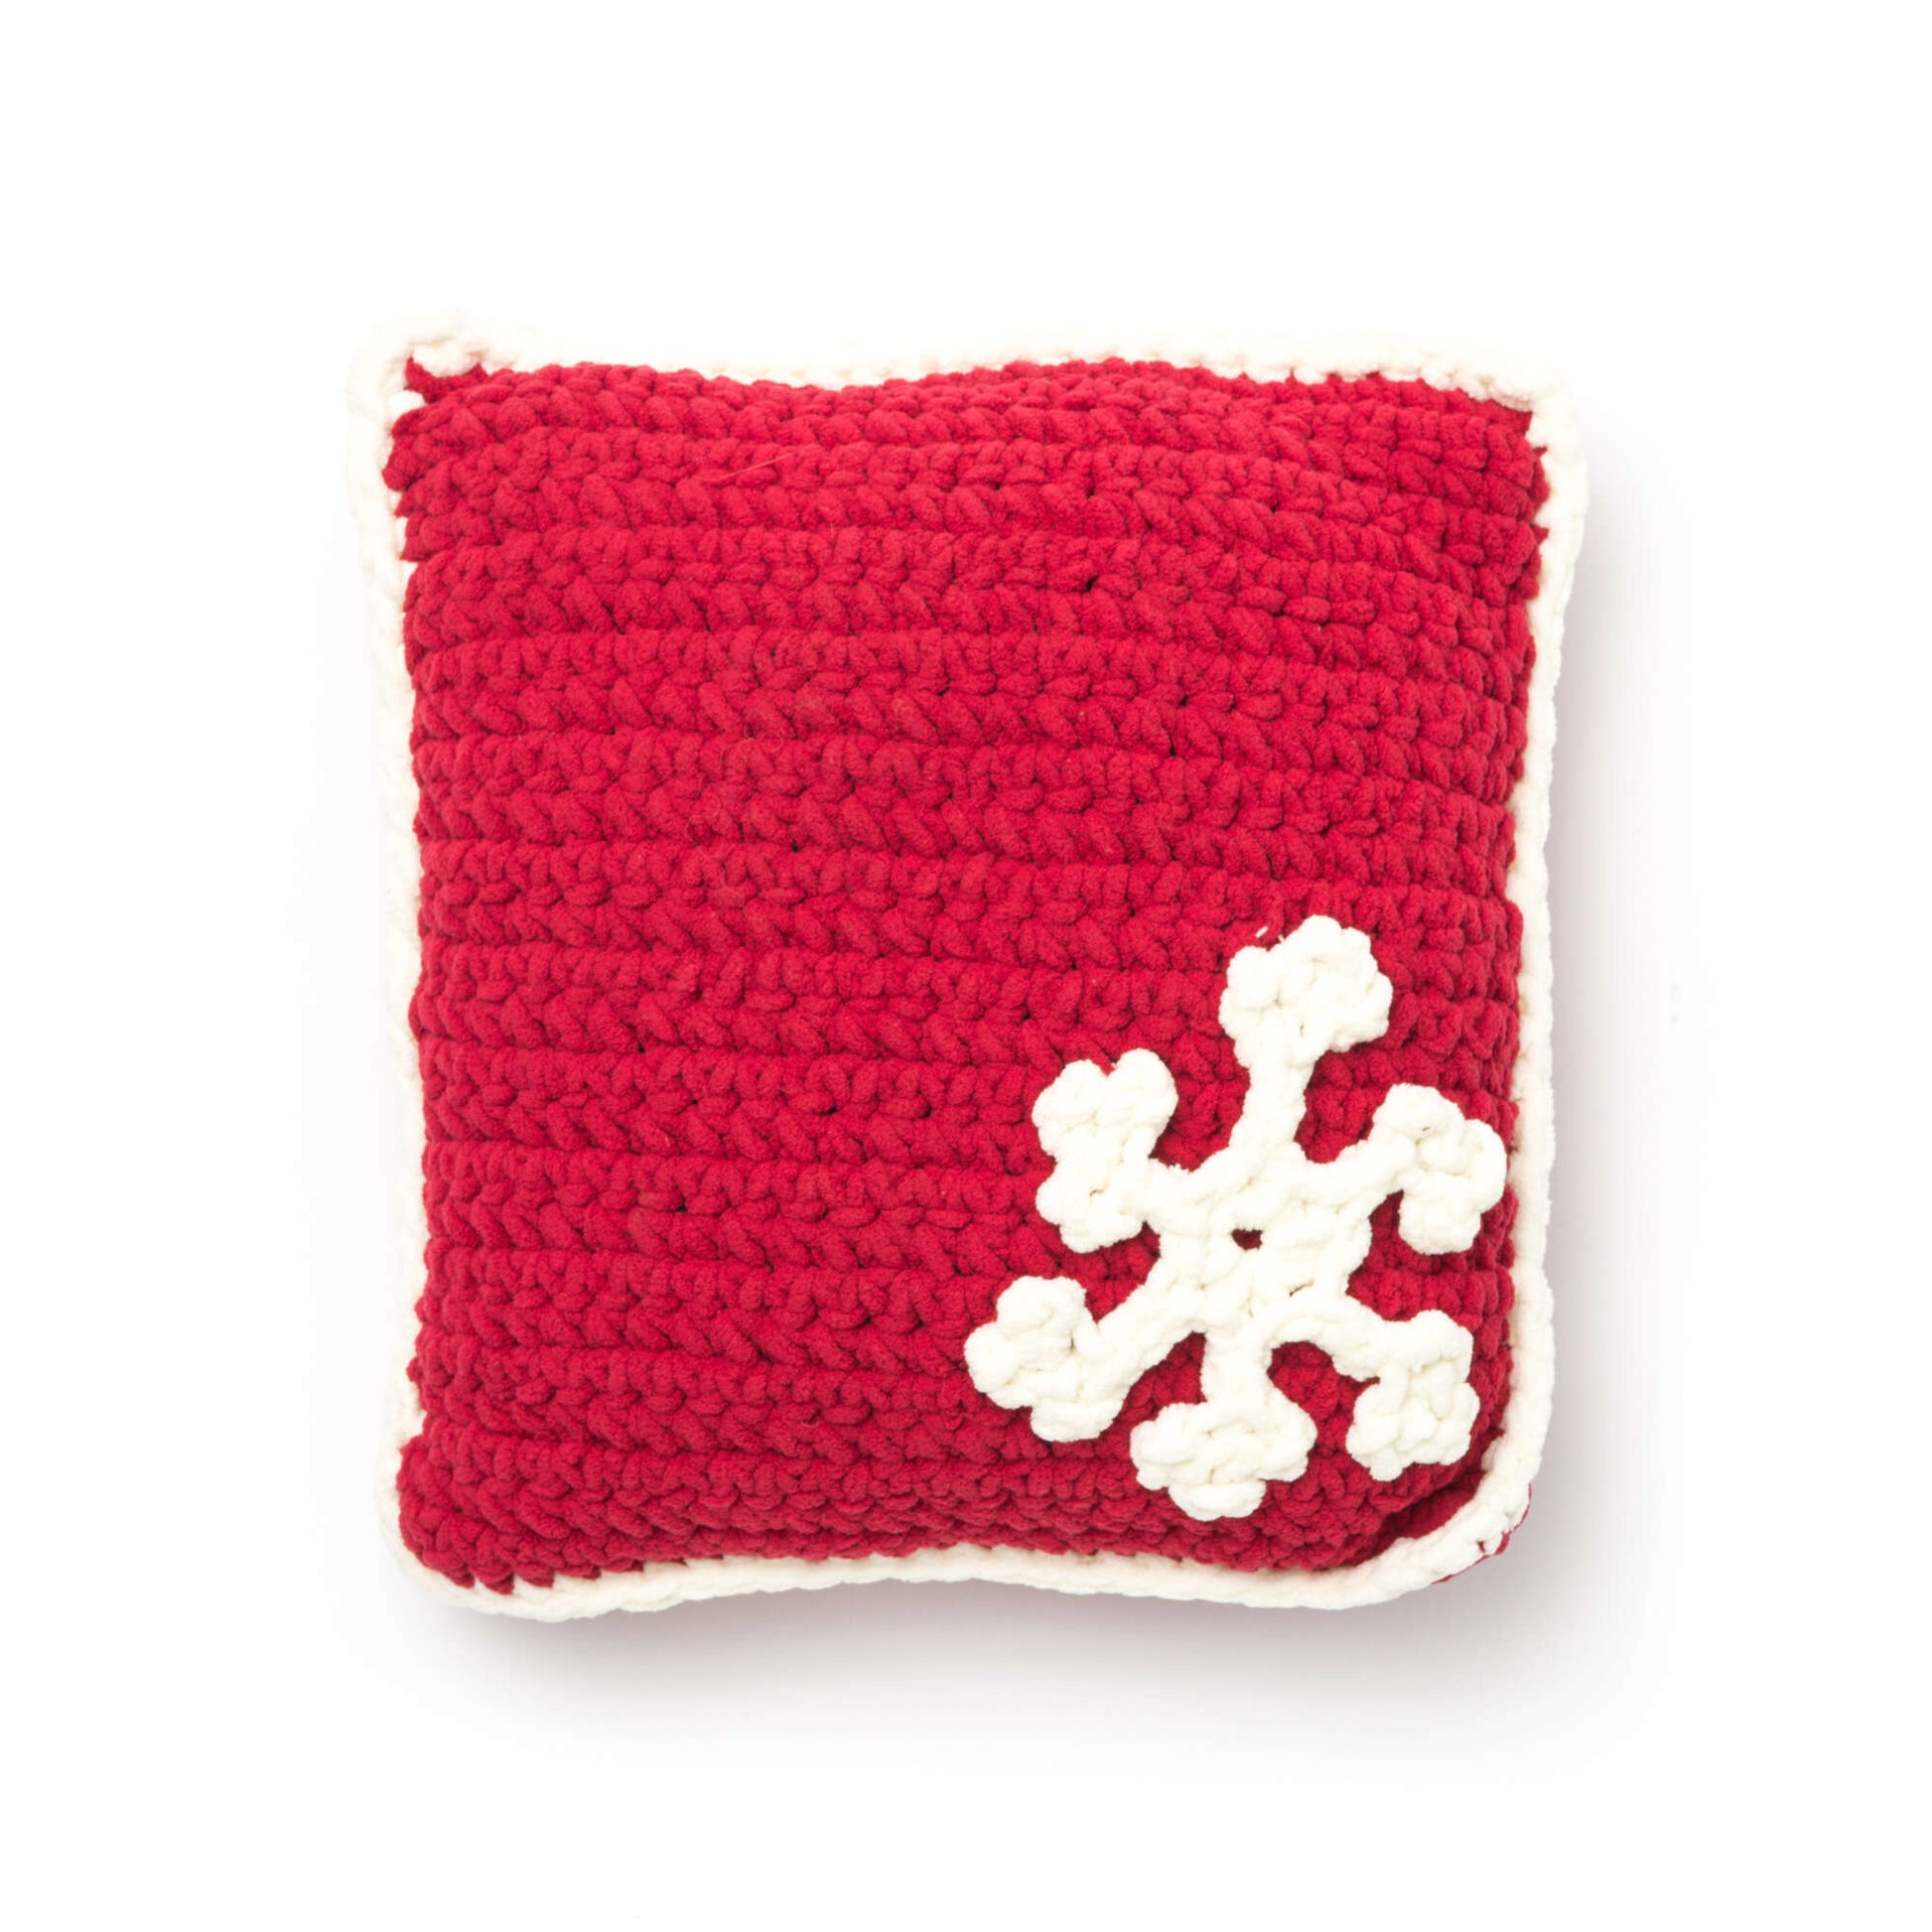 Bernat Snowflake Pillow Crochet Holiday made in Bernat Blanket yarn